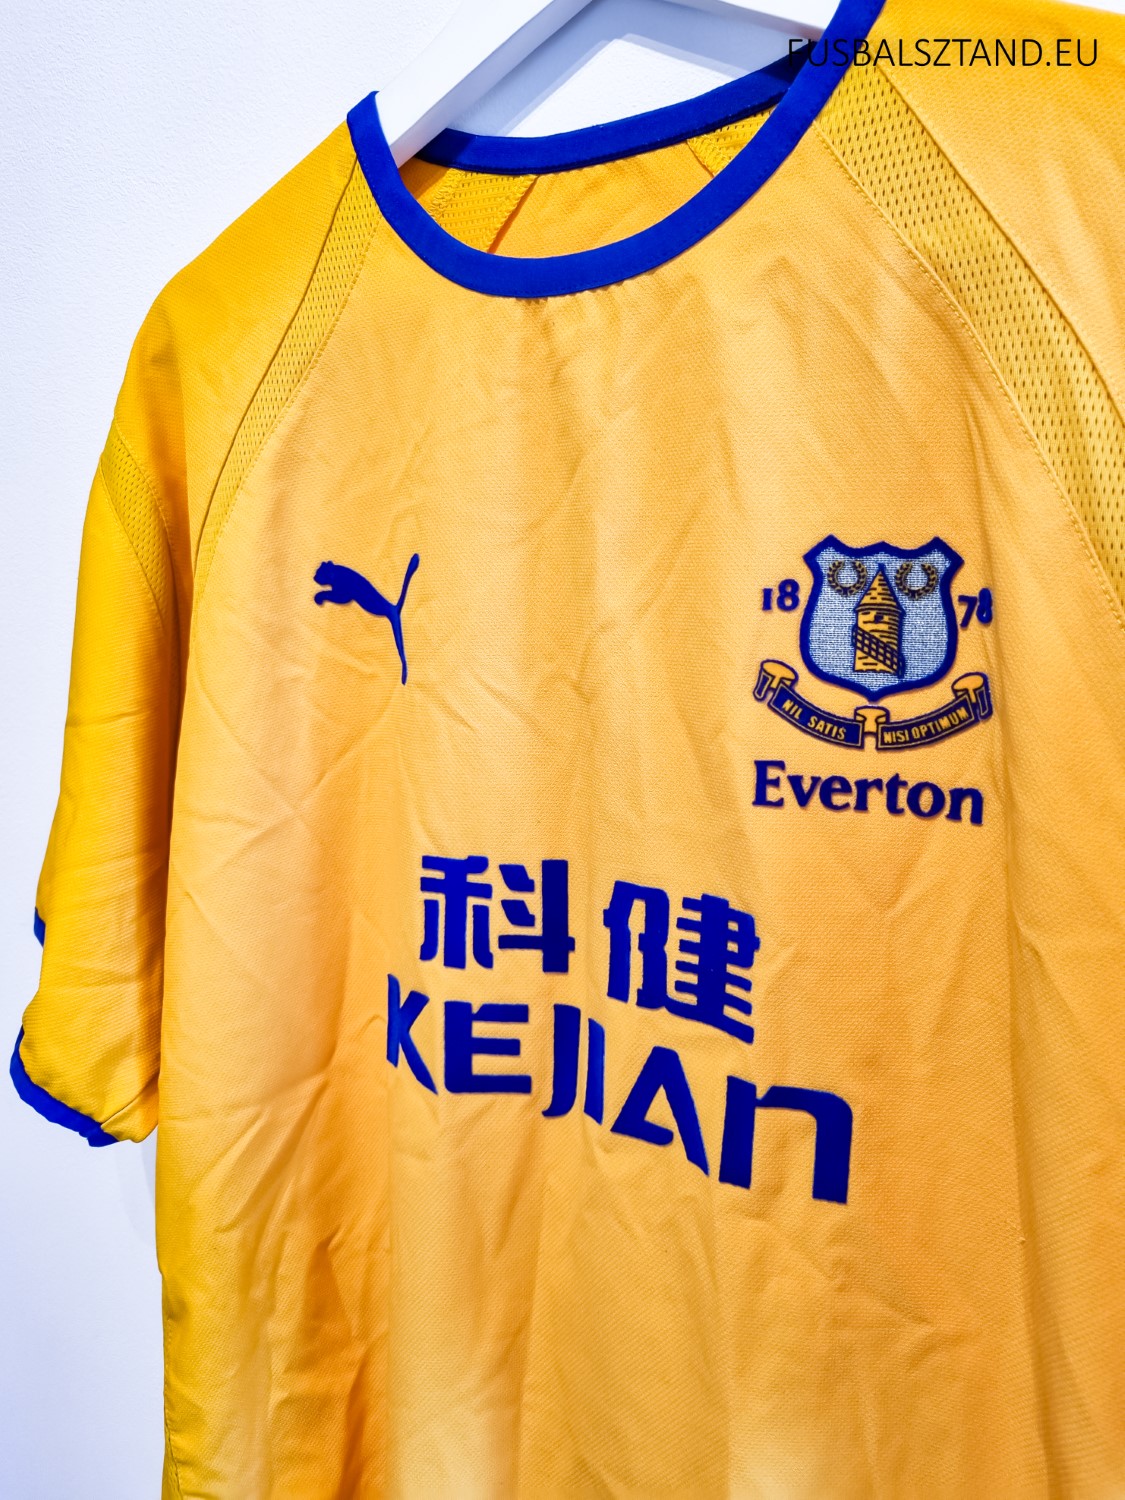 Everton Away M 2003/04 Kevin Kilbane 7764232